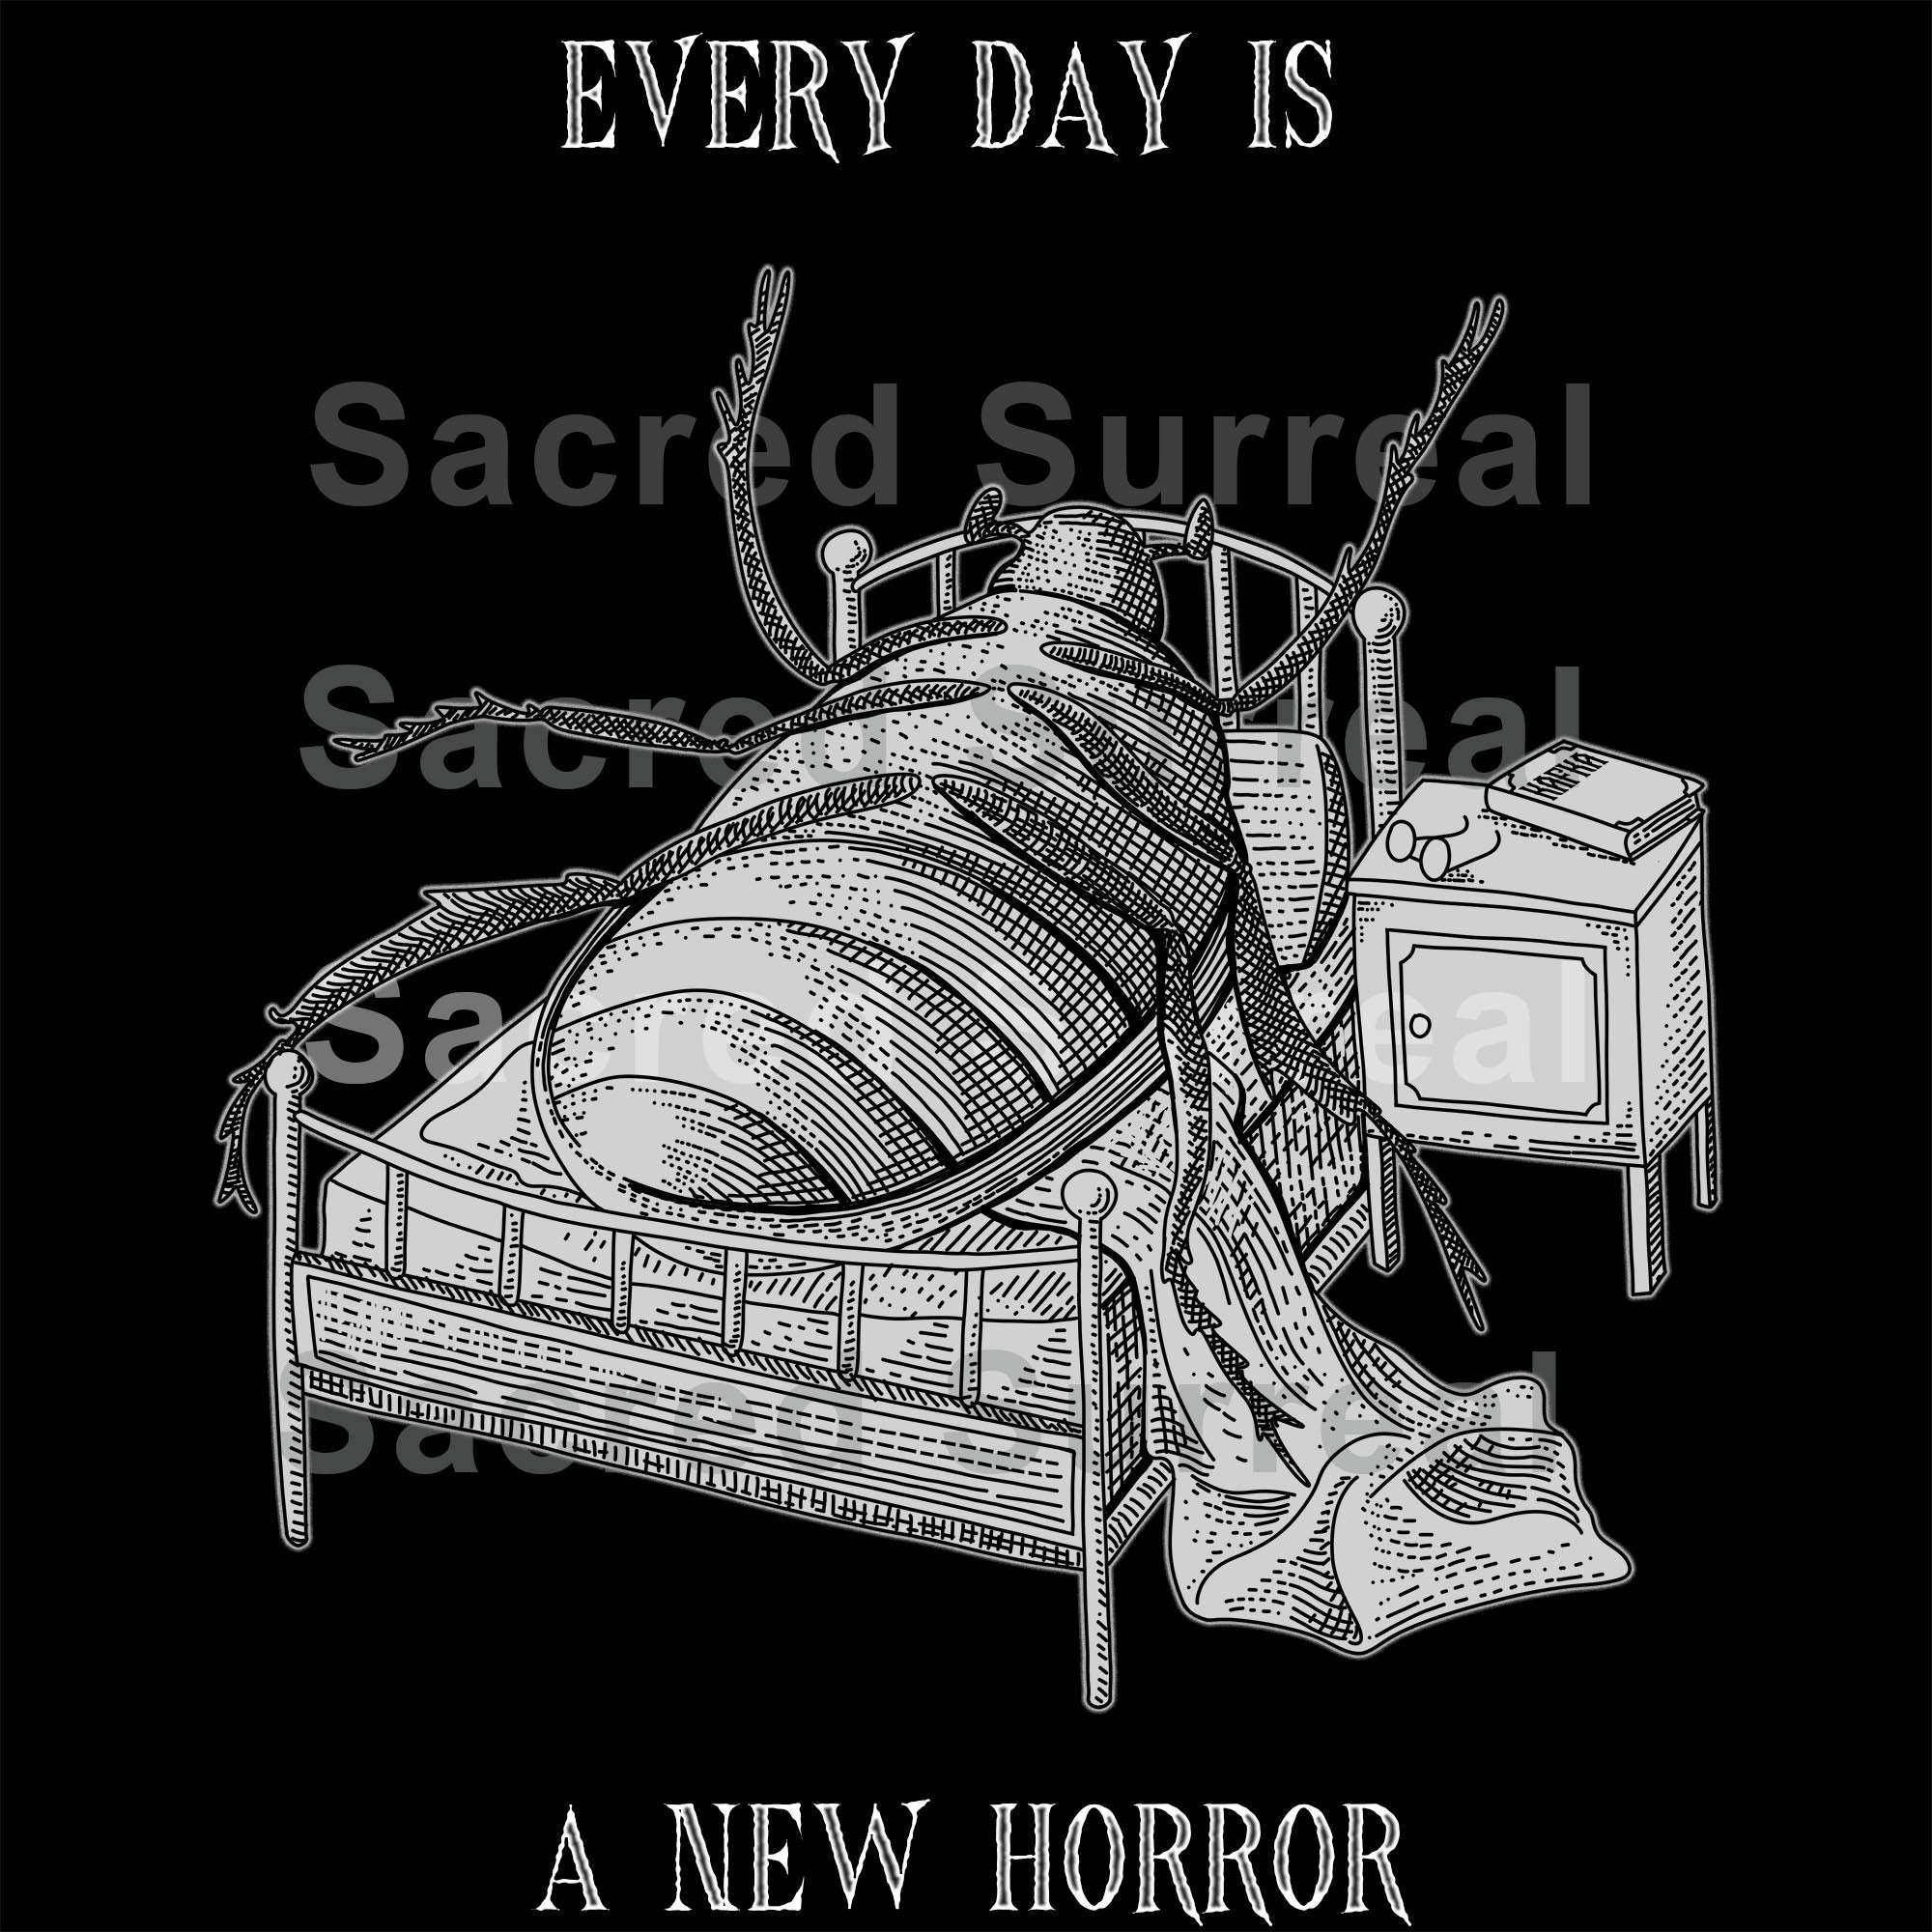 Every Day Is a New Horror | Kafka's Metamorphosis, Existential Literary Art | Dark Humor, Sarcastic Morbid Cute Graphic Art TShirt - Sacred Surreal